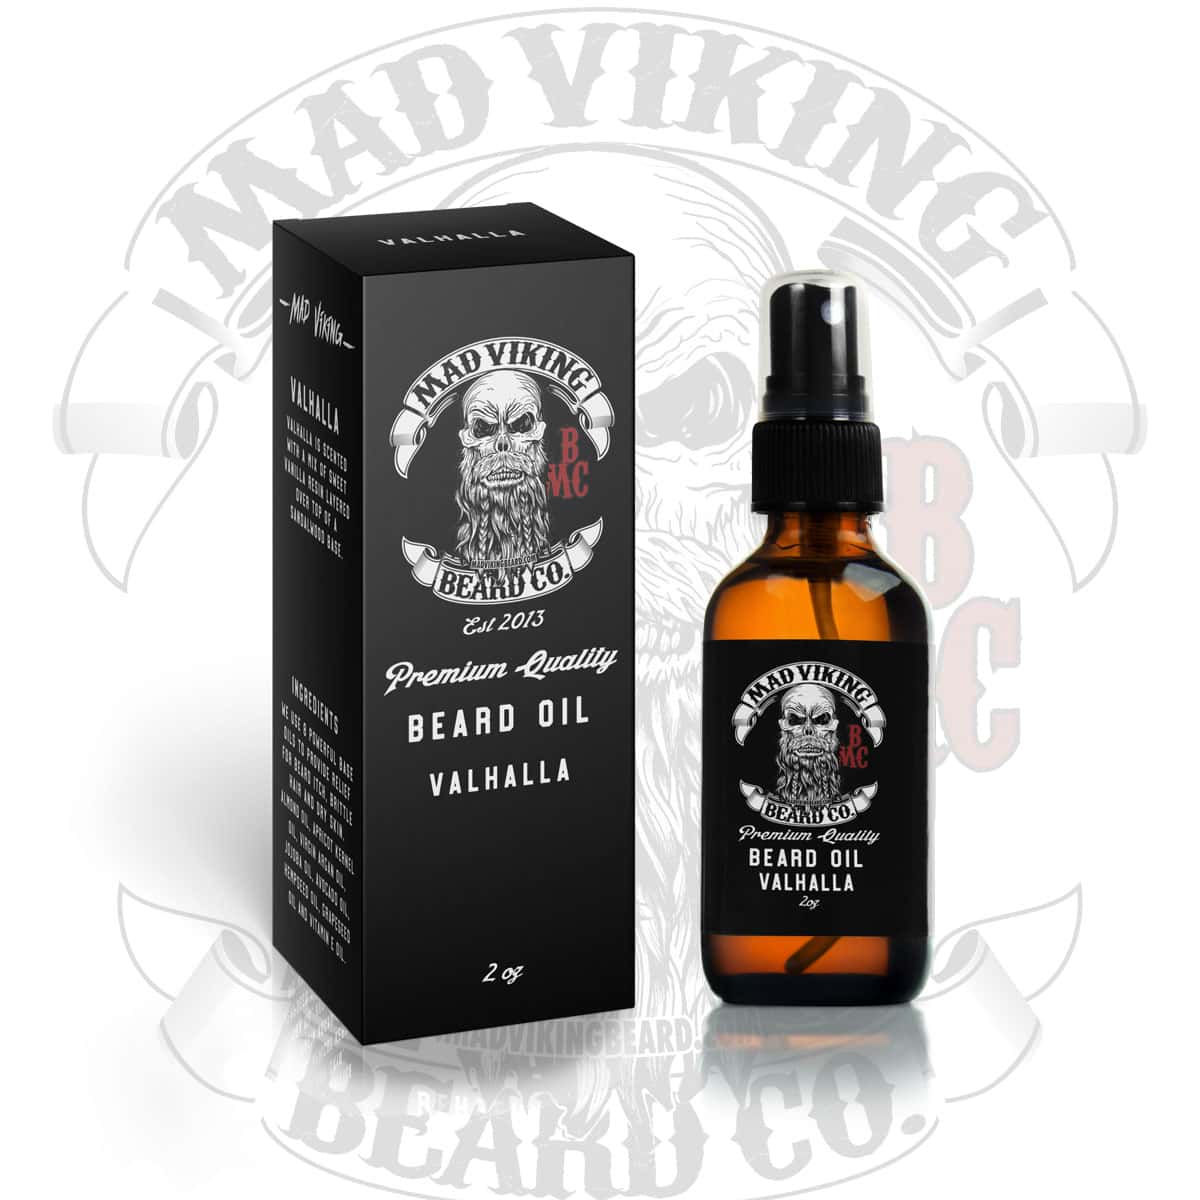 Mad Viking beard oil in Valhalla